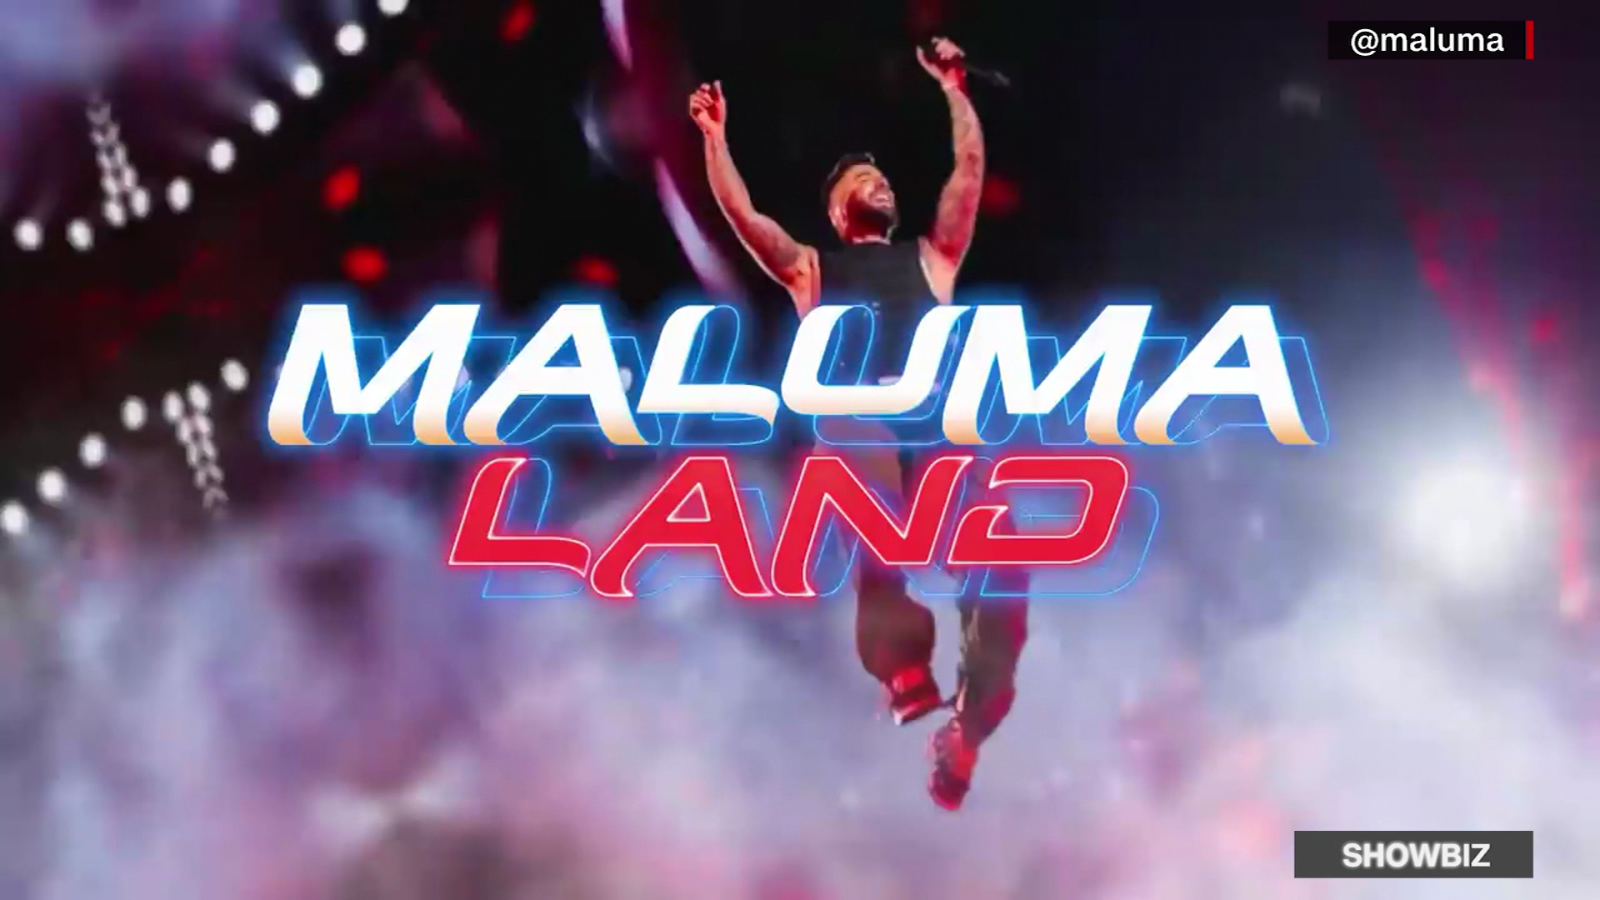 Maluma announces his new project Maluma Land in Las Vegas The Limited